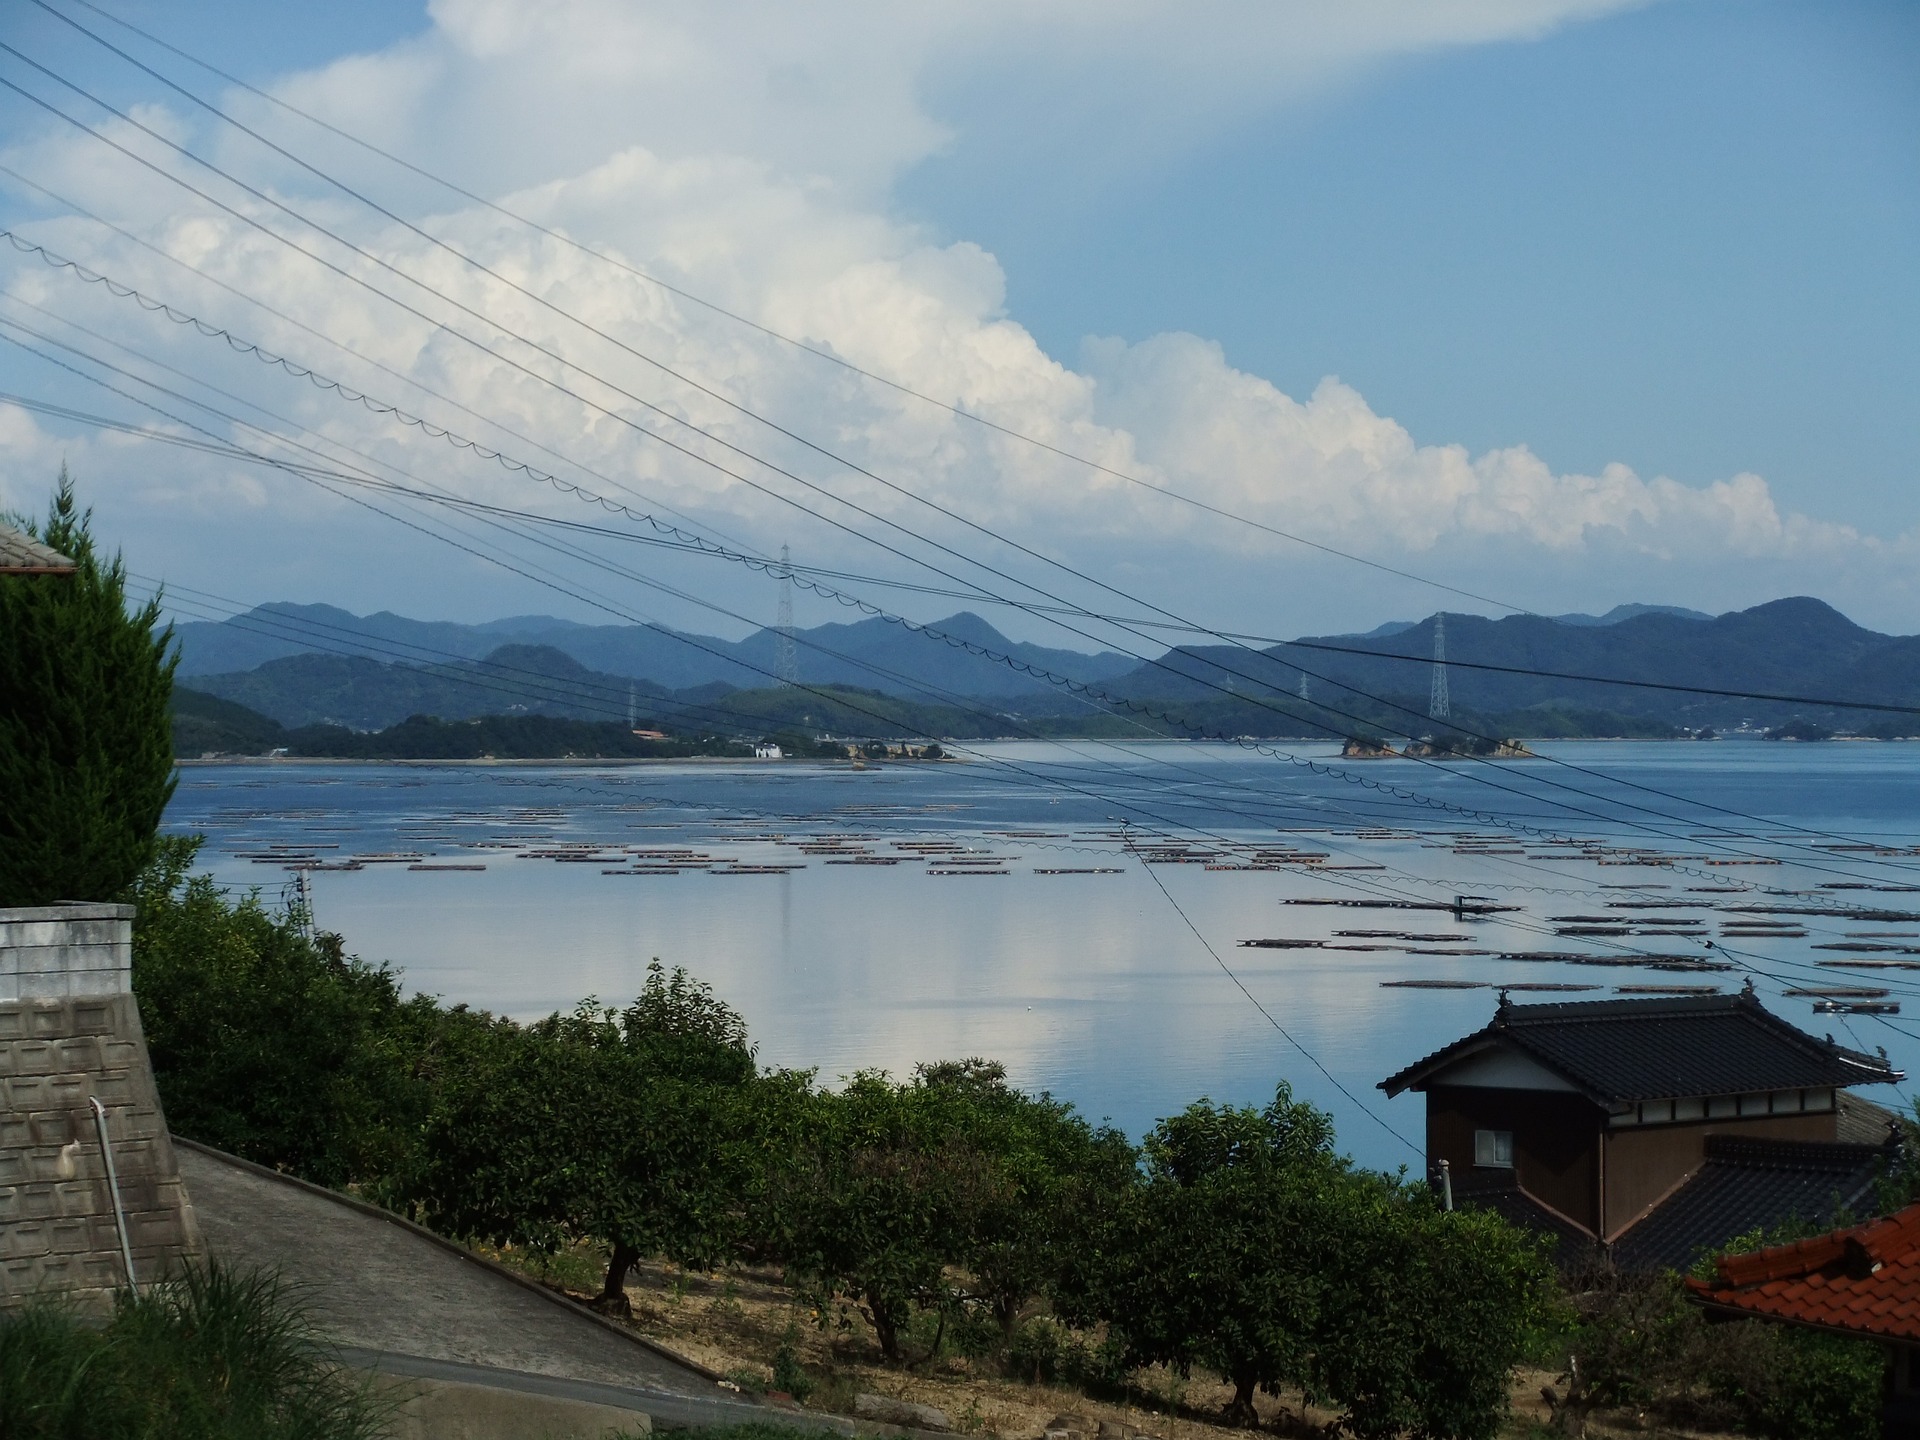 Seto inland sea in Japan